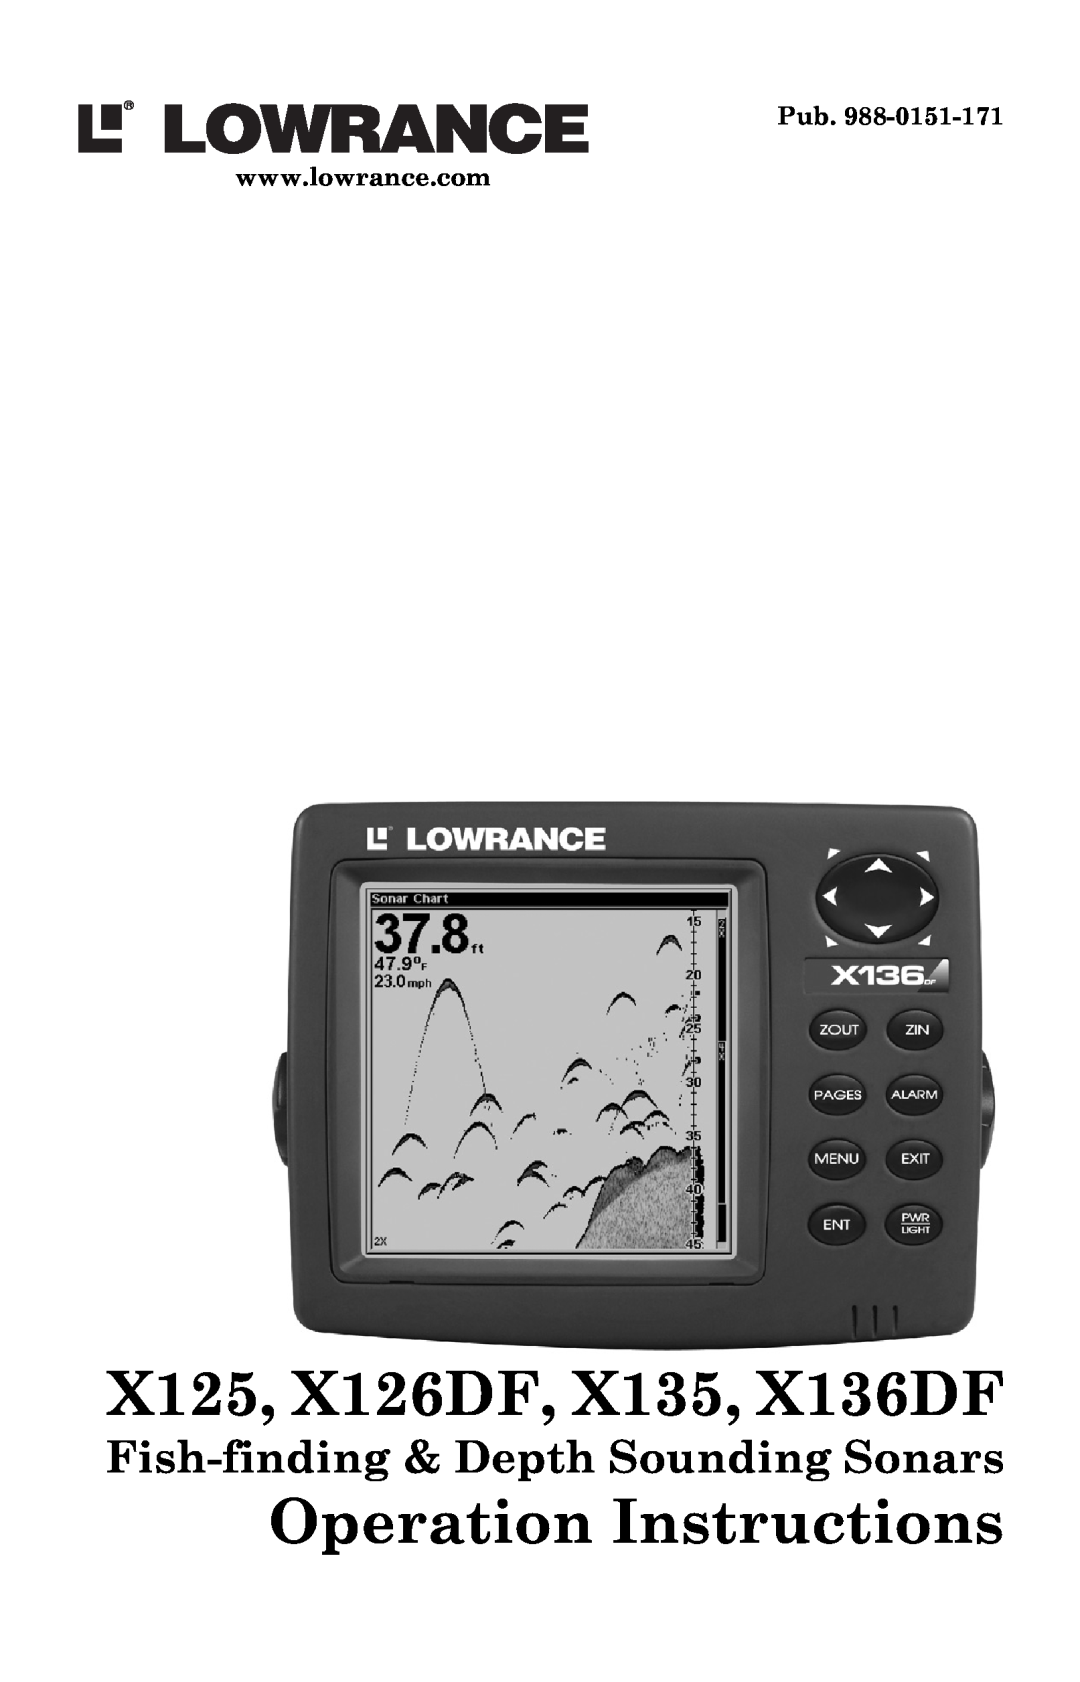 Lowrance electronic manual Fish-finding & Depth Sounding Sonars, X125, X126DF, X135, X136DF, Operation Instructions 